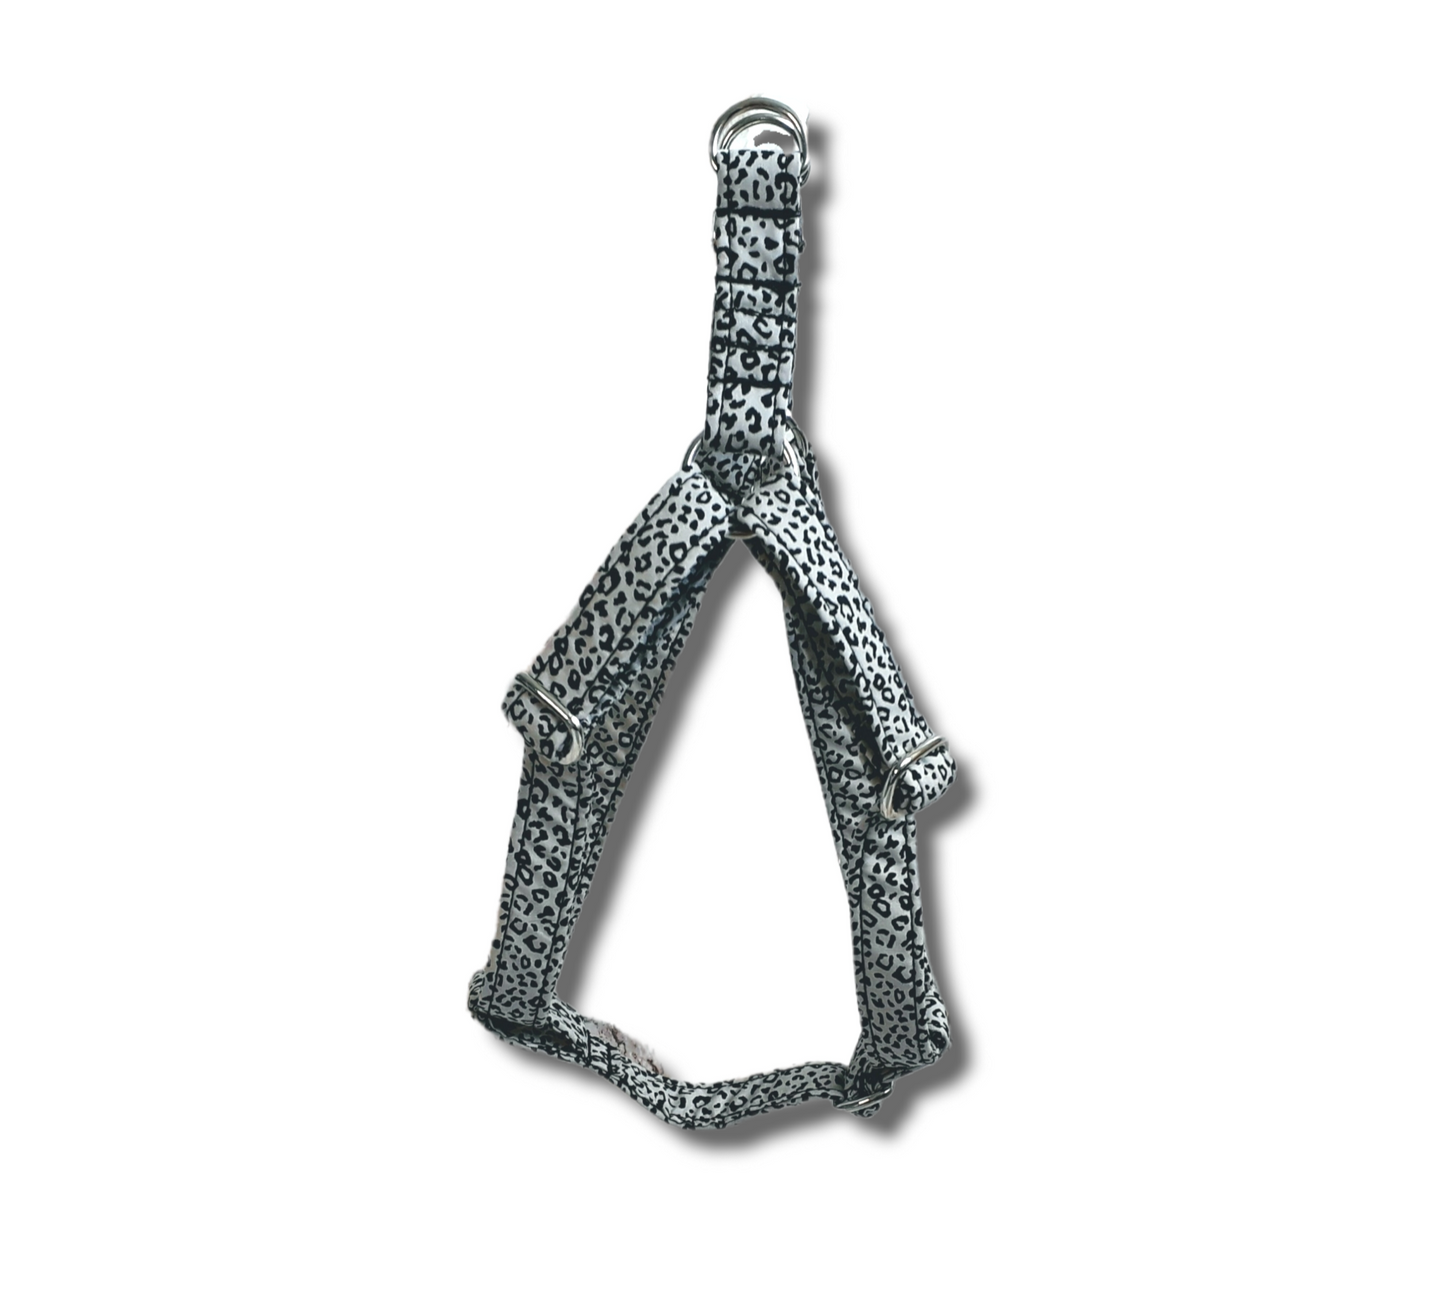 Adjustable step in dog harness - silver leopard print